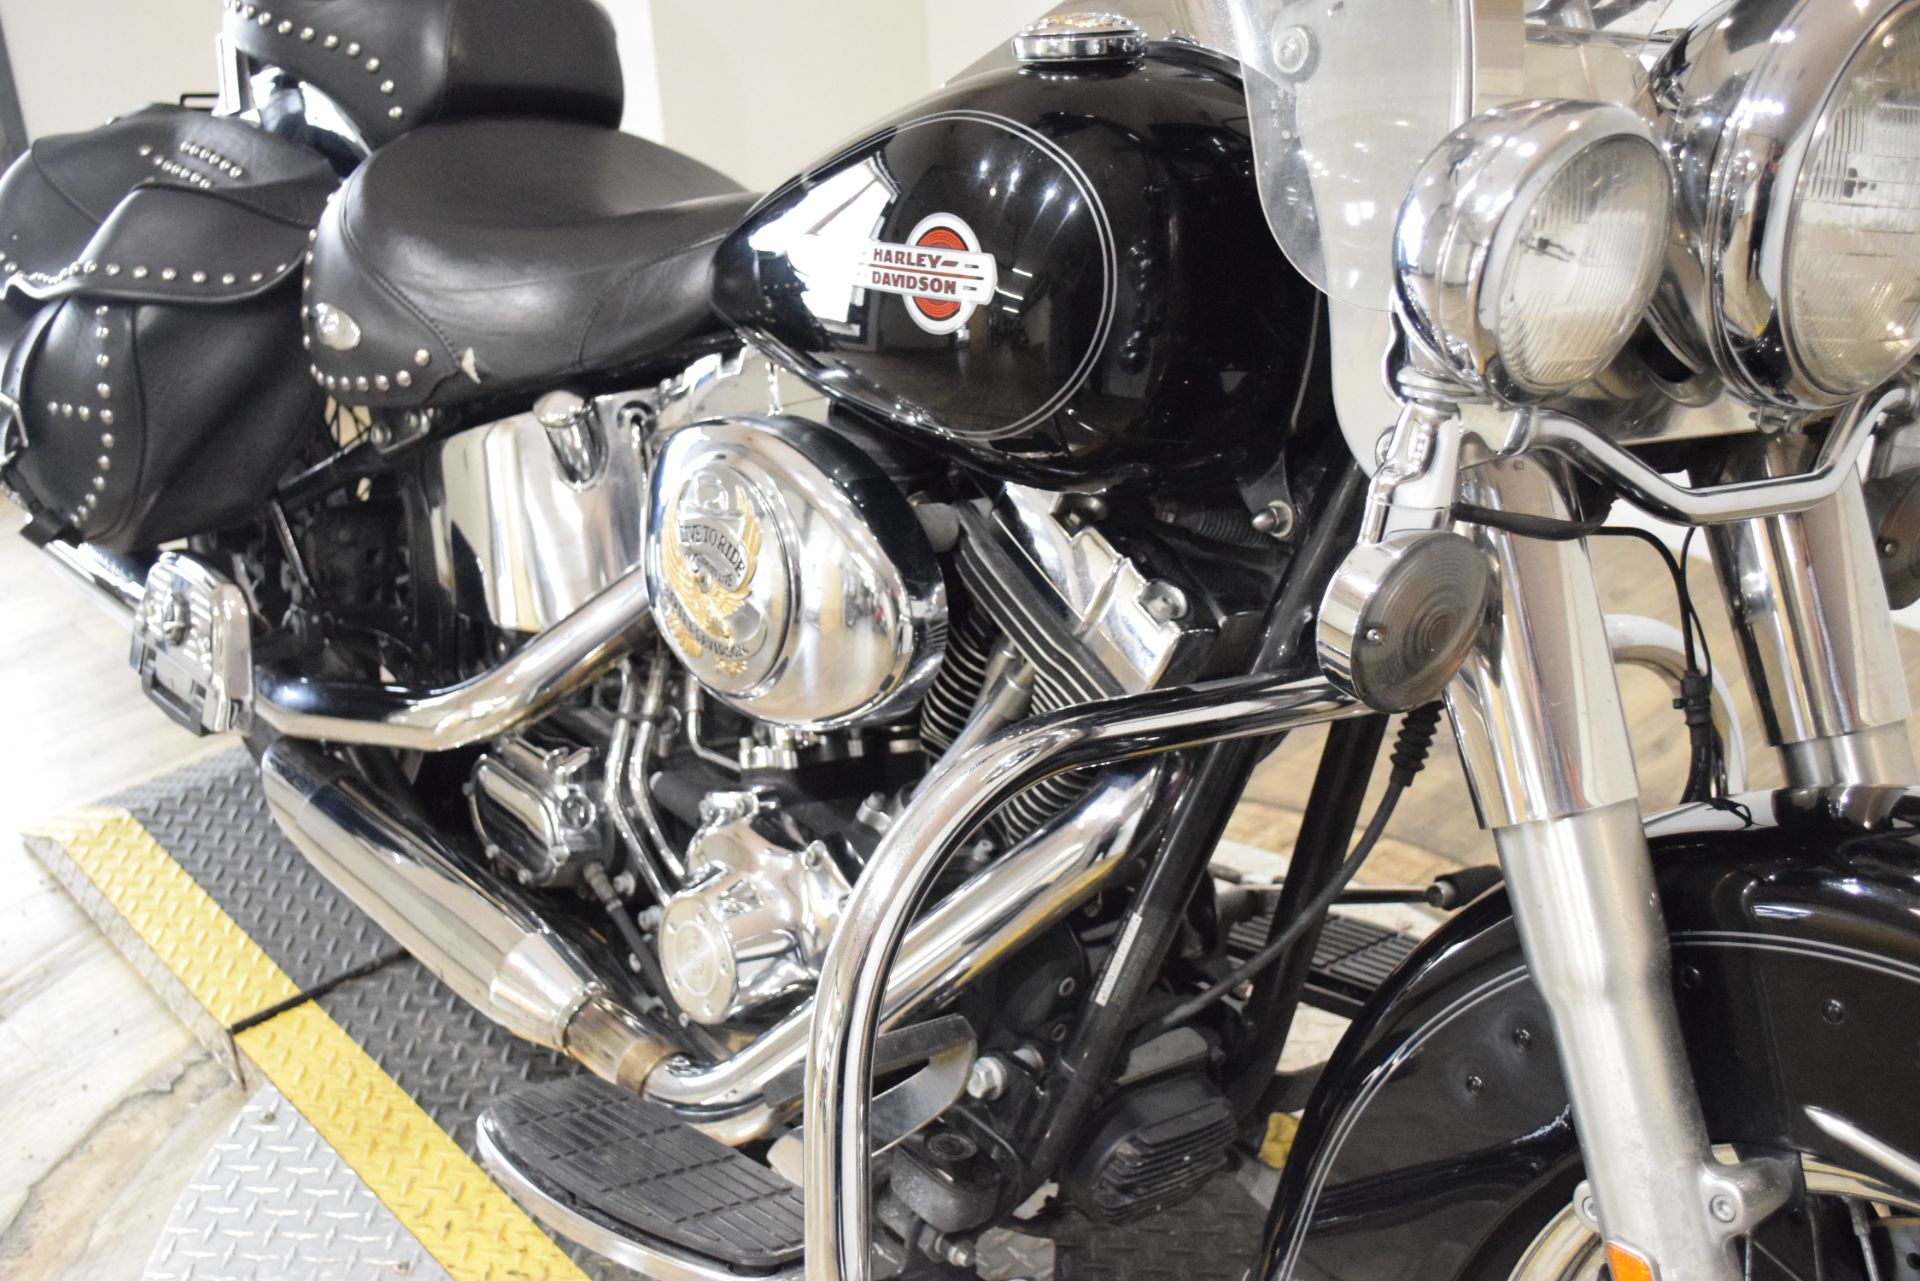 2004 Harley-Davidson FLSTC/FLSTCI Heritage Softail® Classic in Wauconda, Illinois - Photo 4